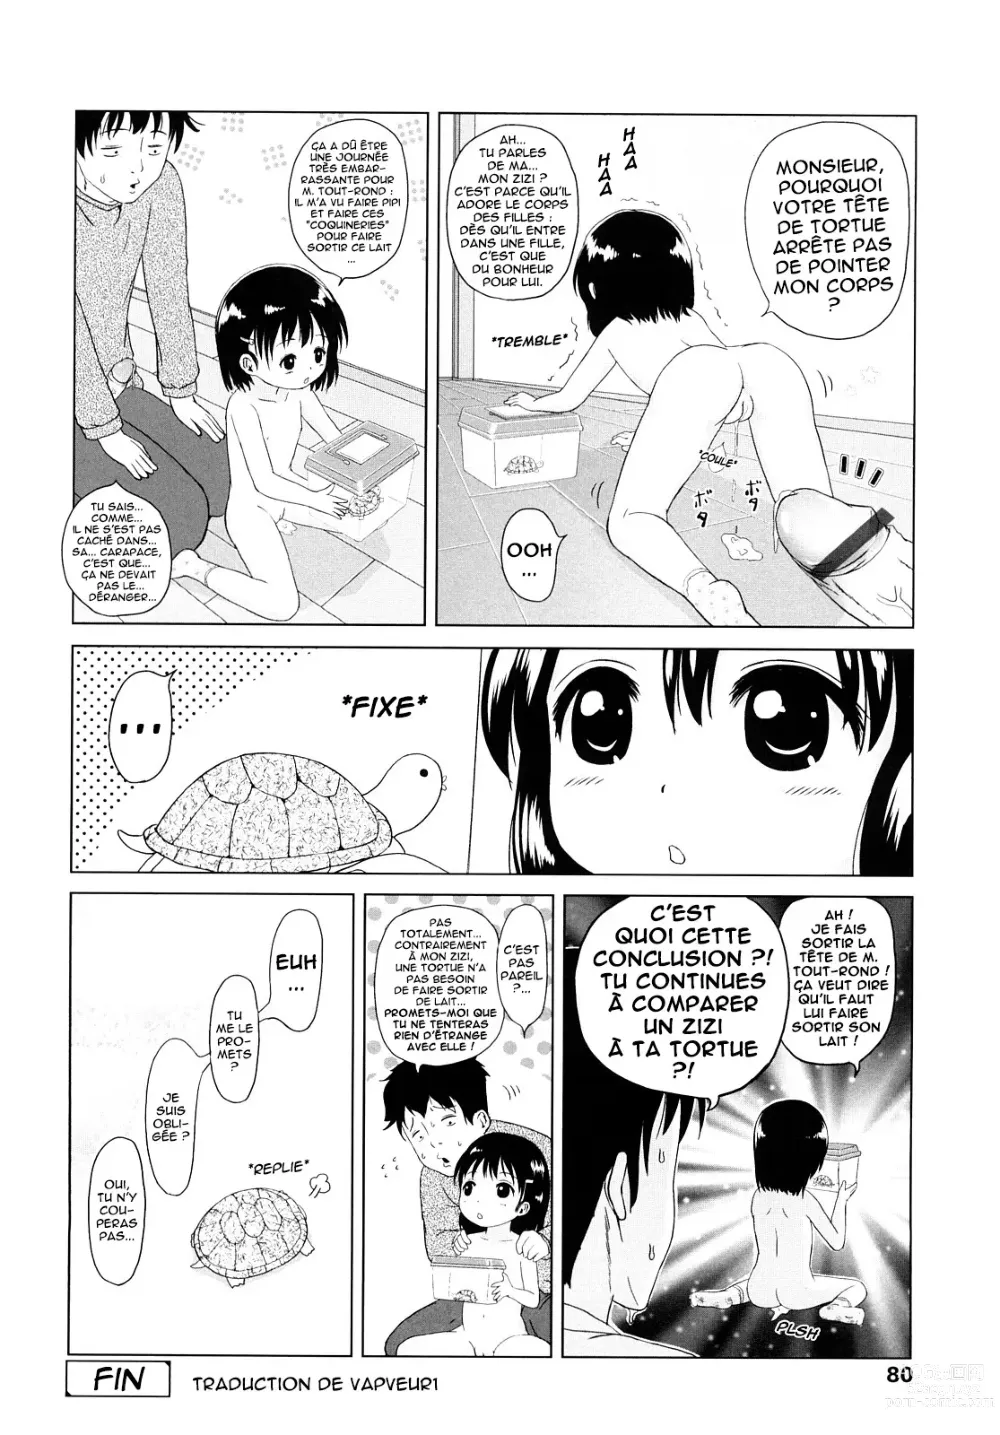 Page 18 of manga Elevator Action